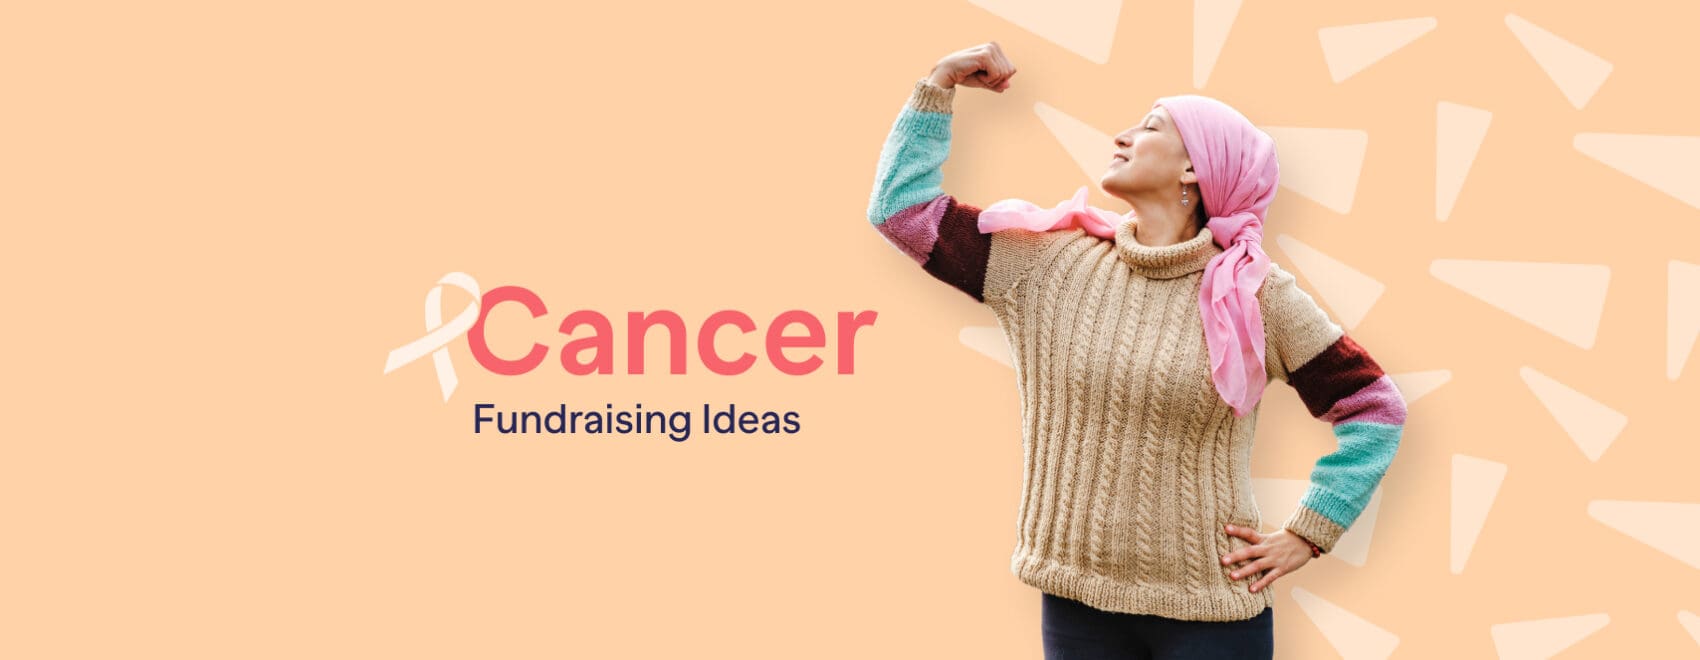 Cancer fundraising ideas